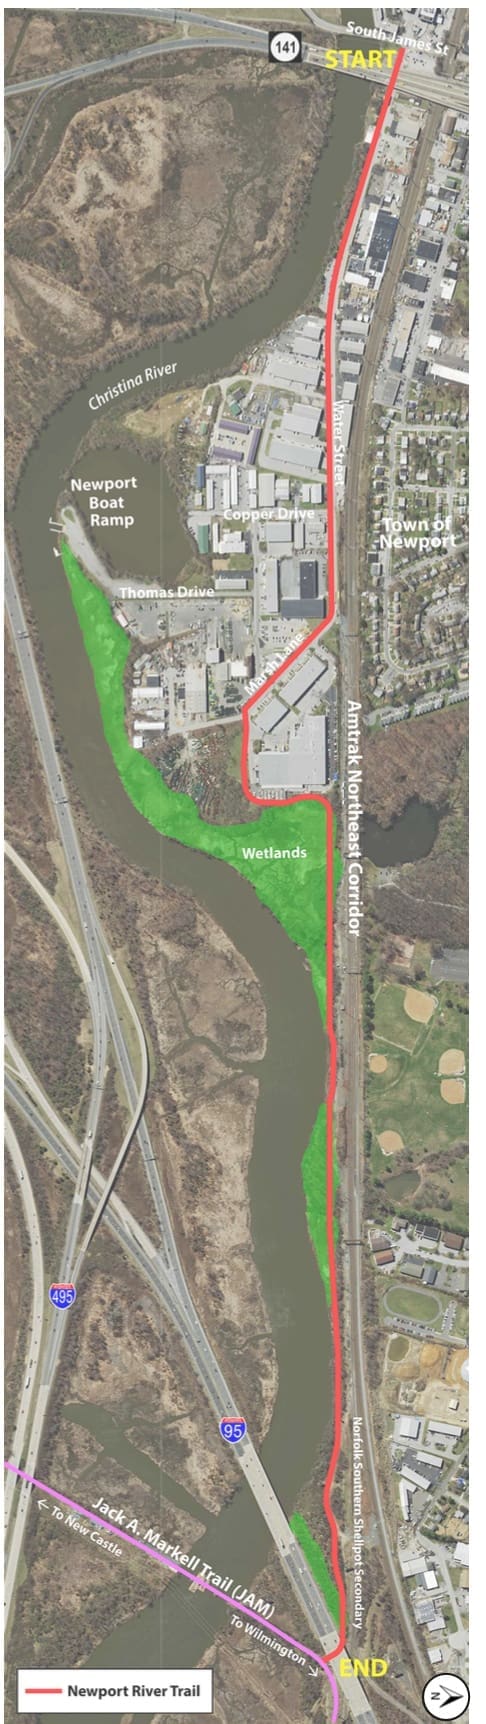 The Newport River Trail will go over wetlands. (WILMAPCO)